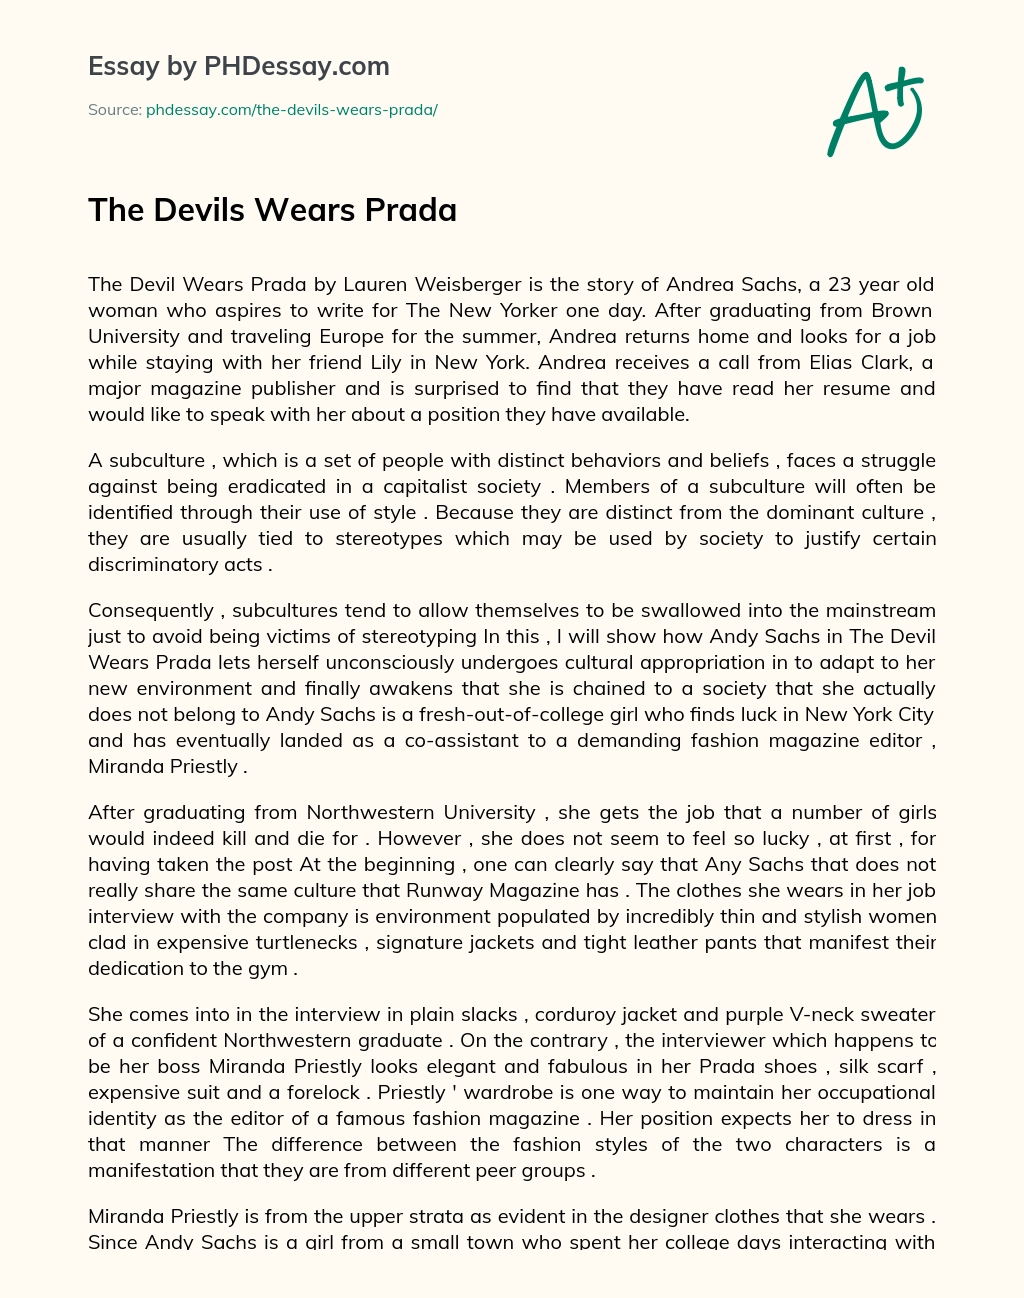 The Devils Wears Prada essay